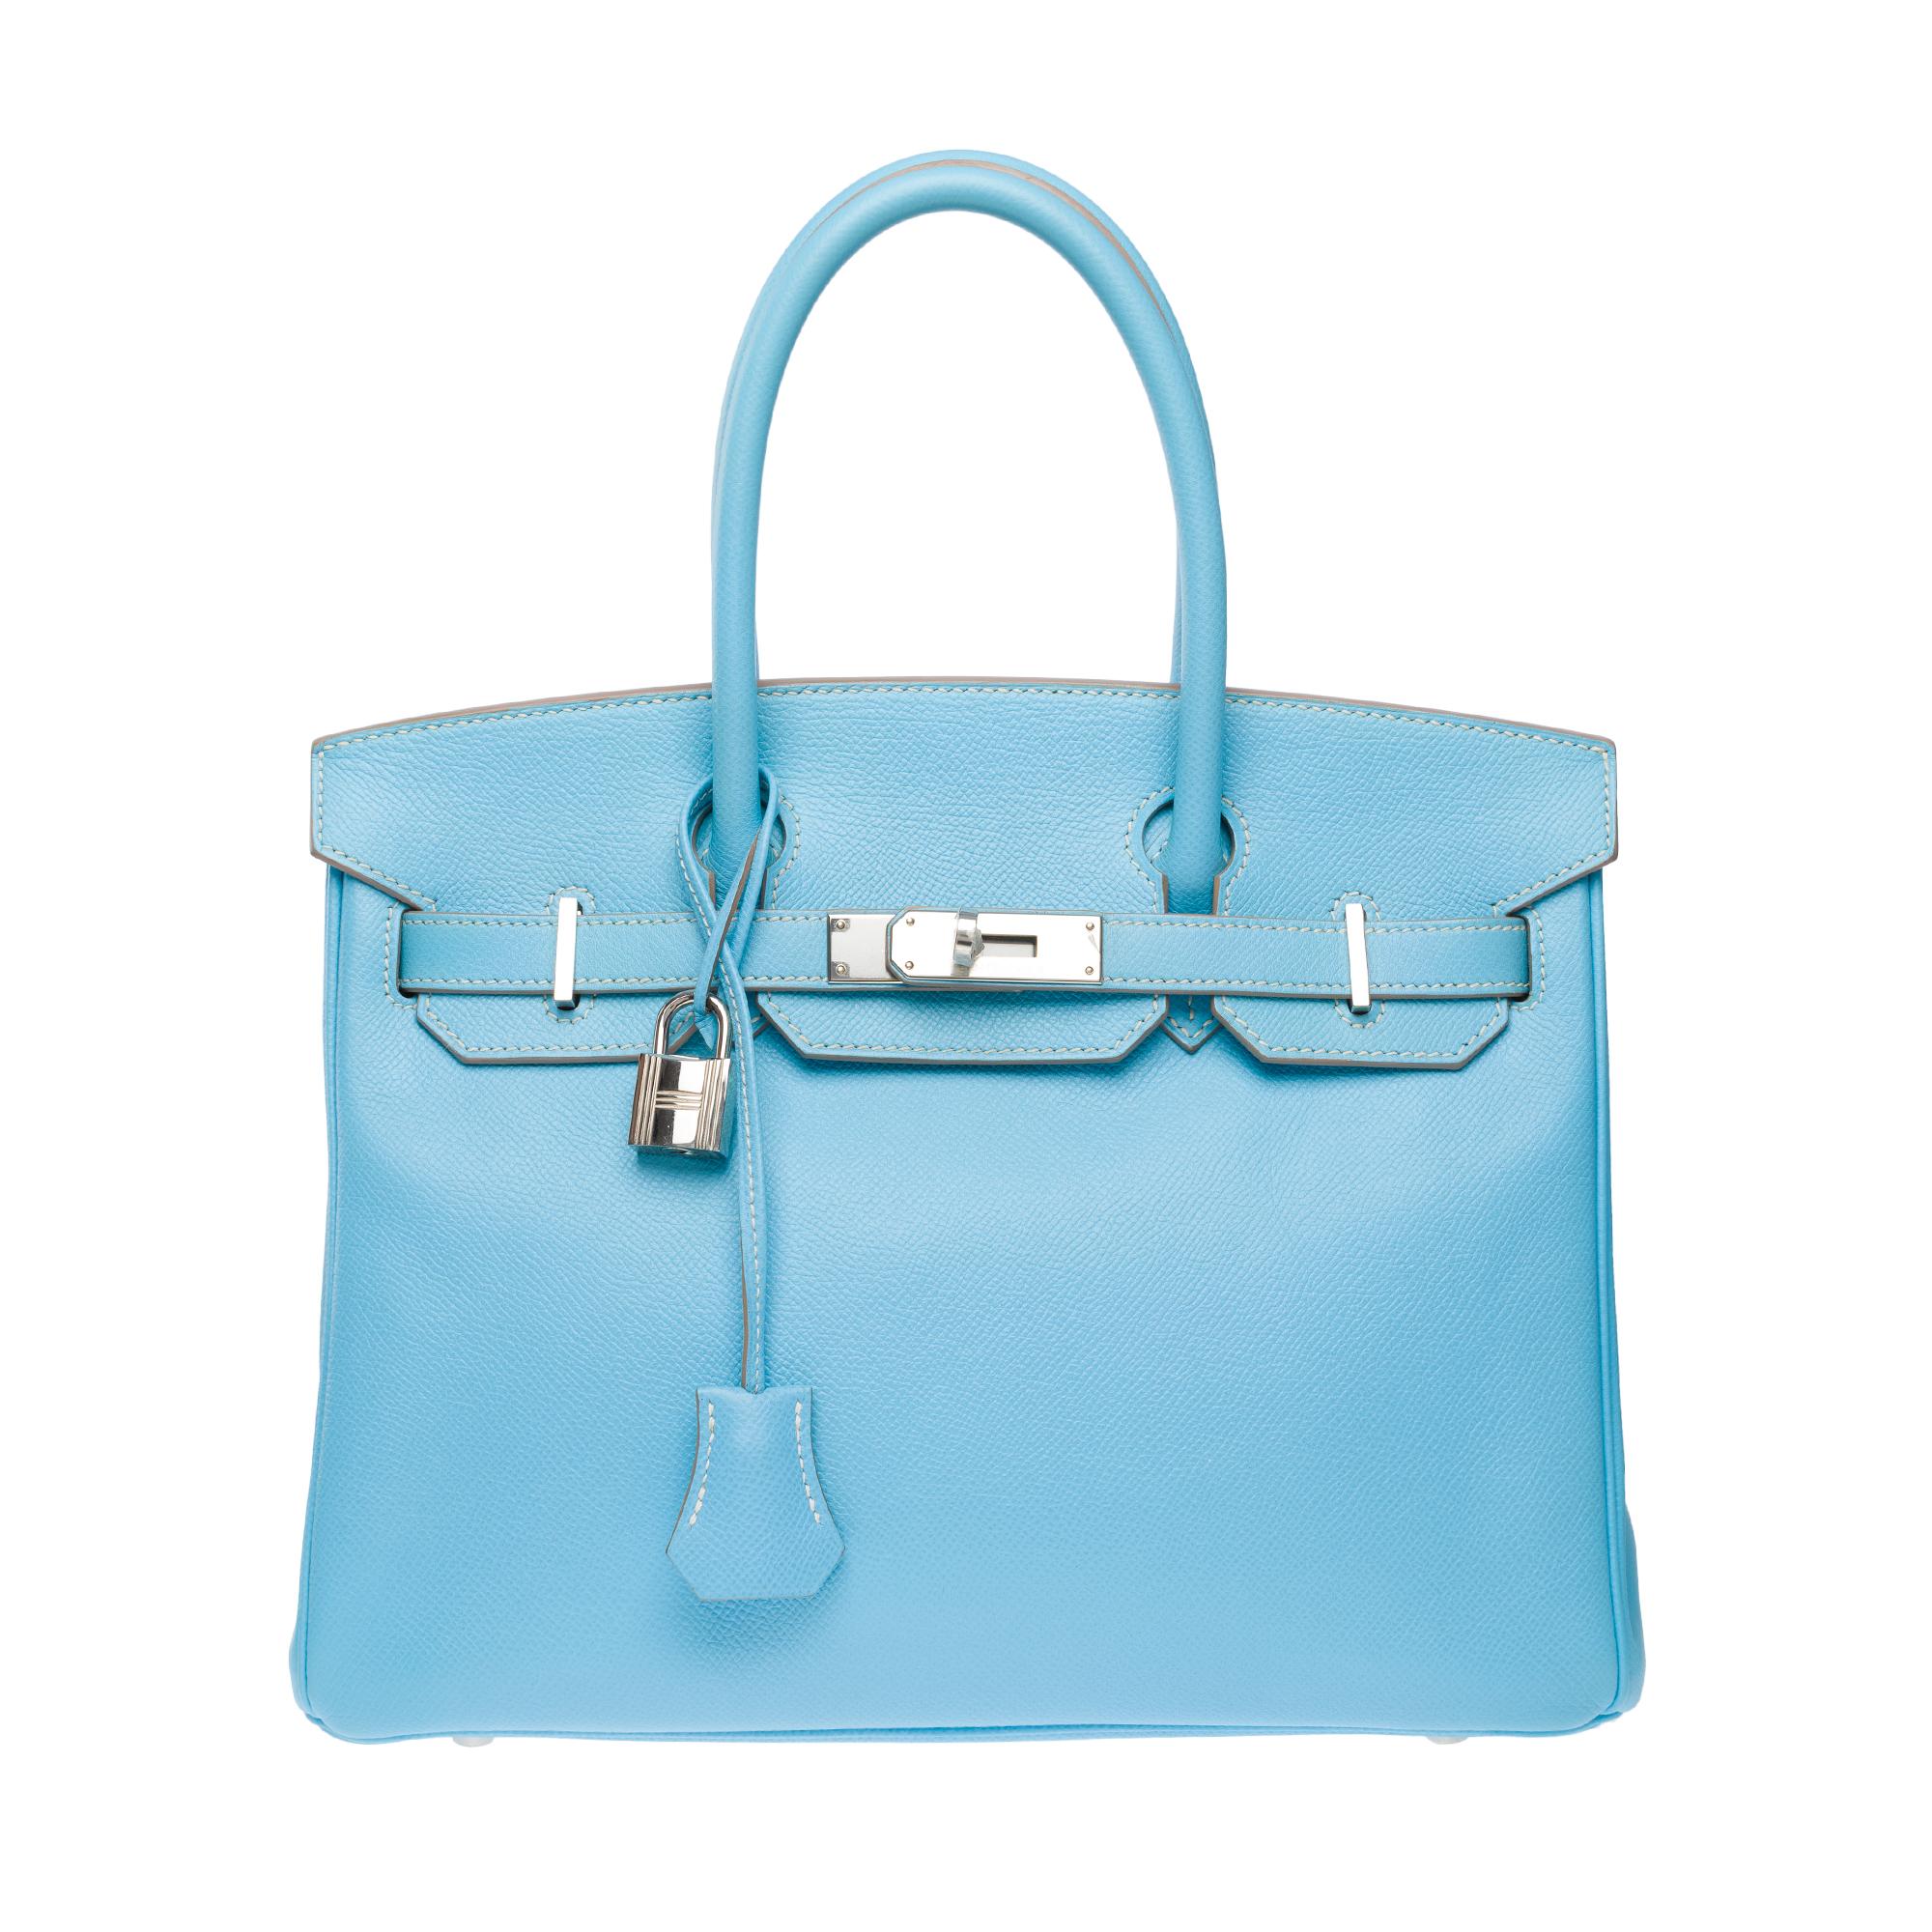 Women's Rare Hermes Birkin 30 Candy Edition handbag in Celeste Blue Epsom leather, SHW